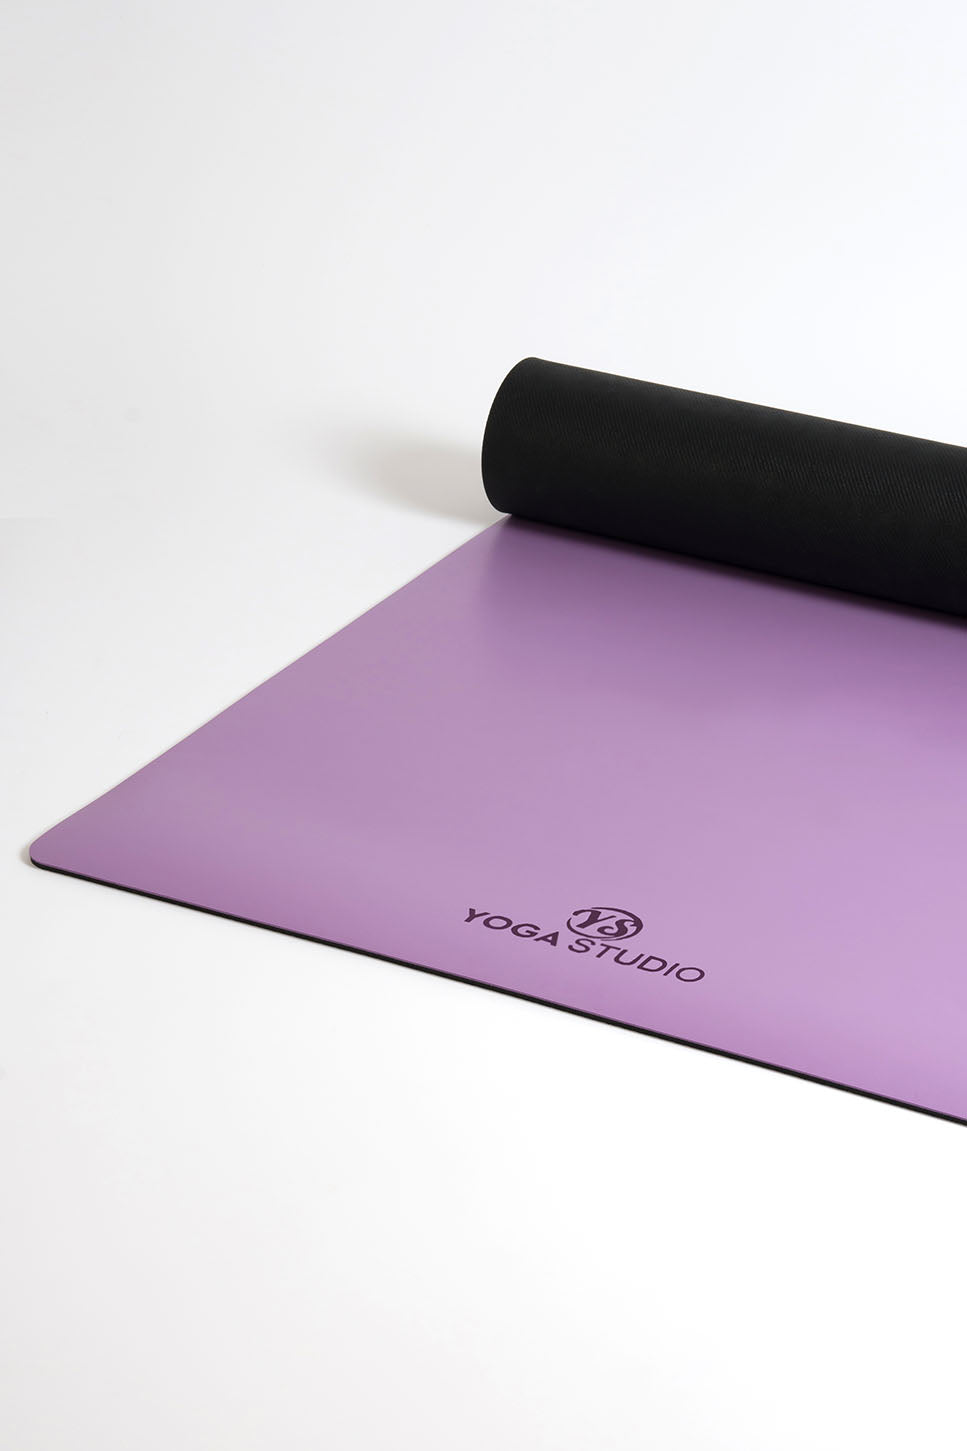 Buy Jade Voyager extra-thin yoga mats (1.6mm)